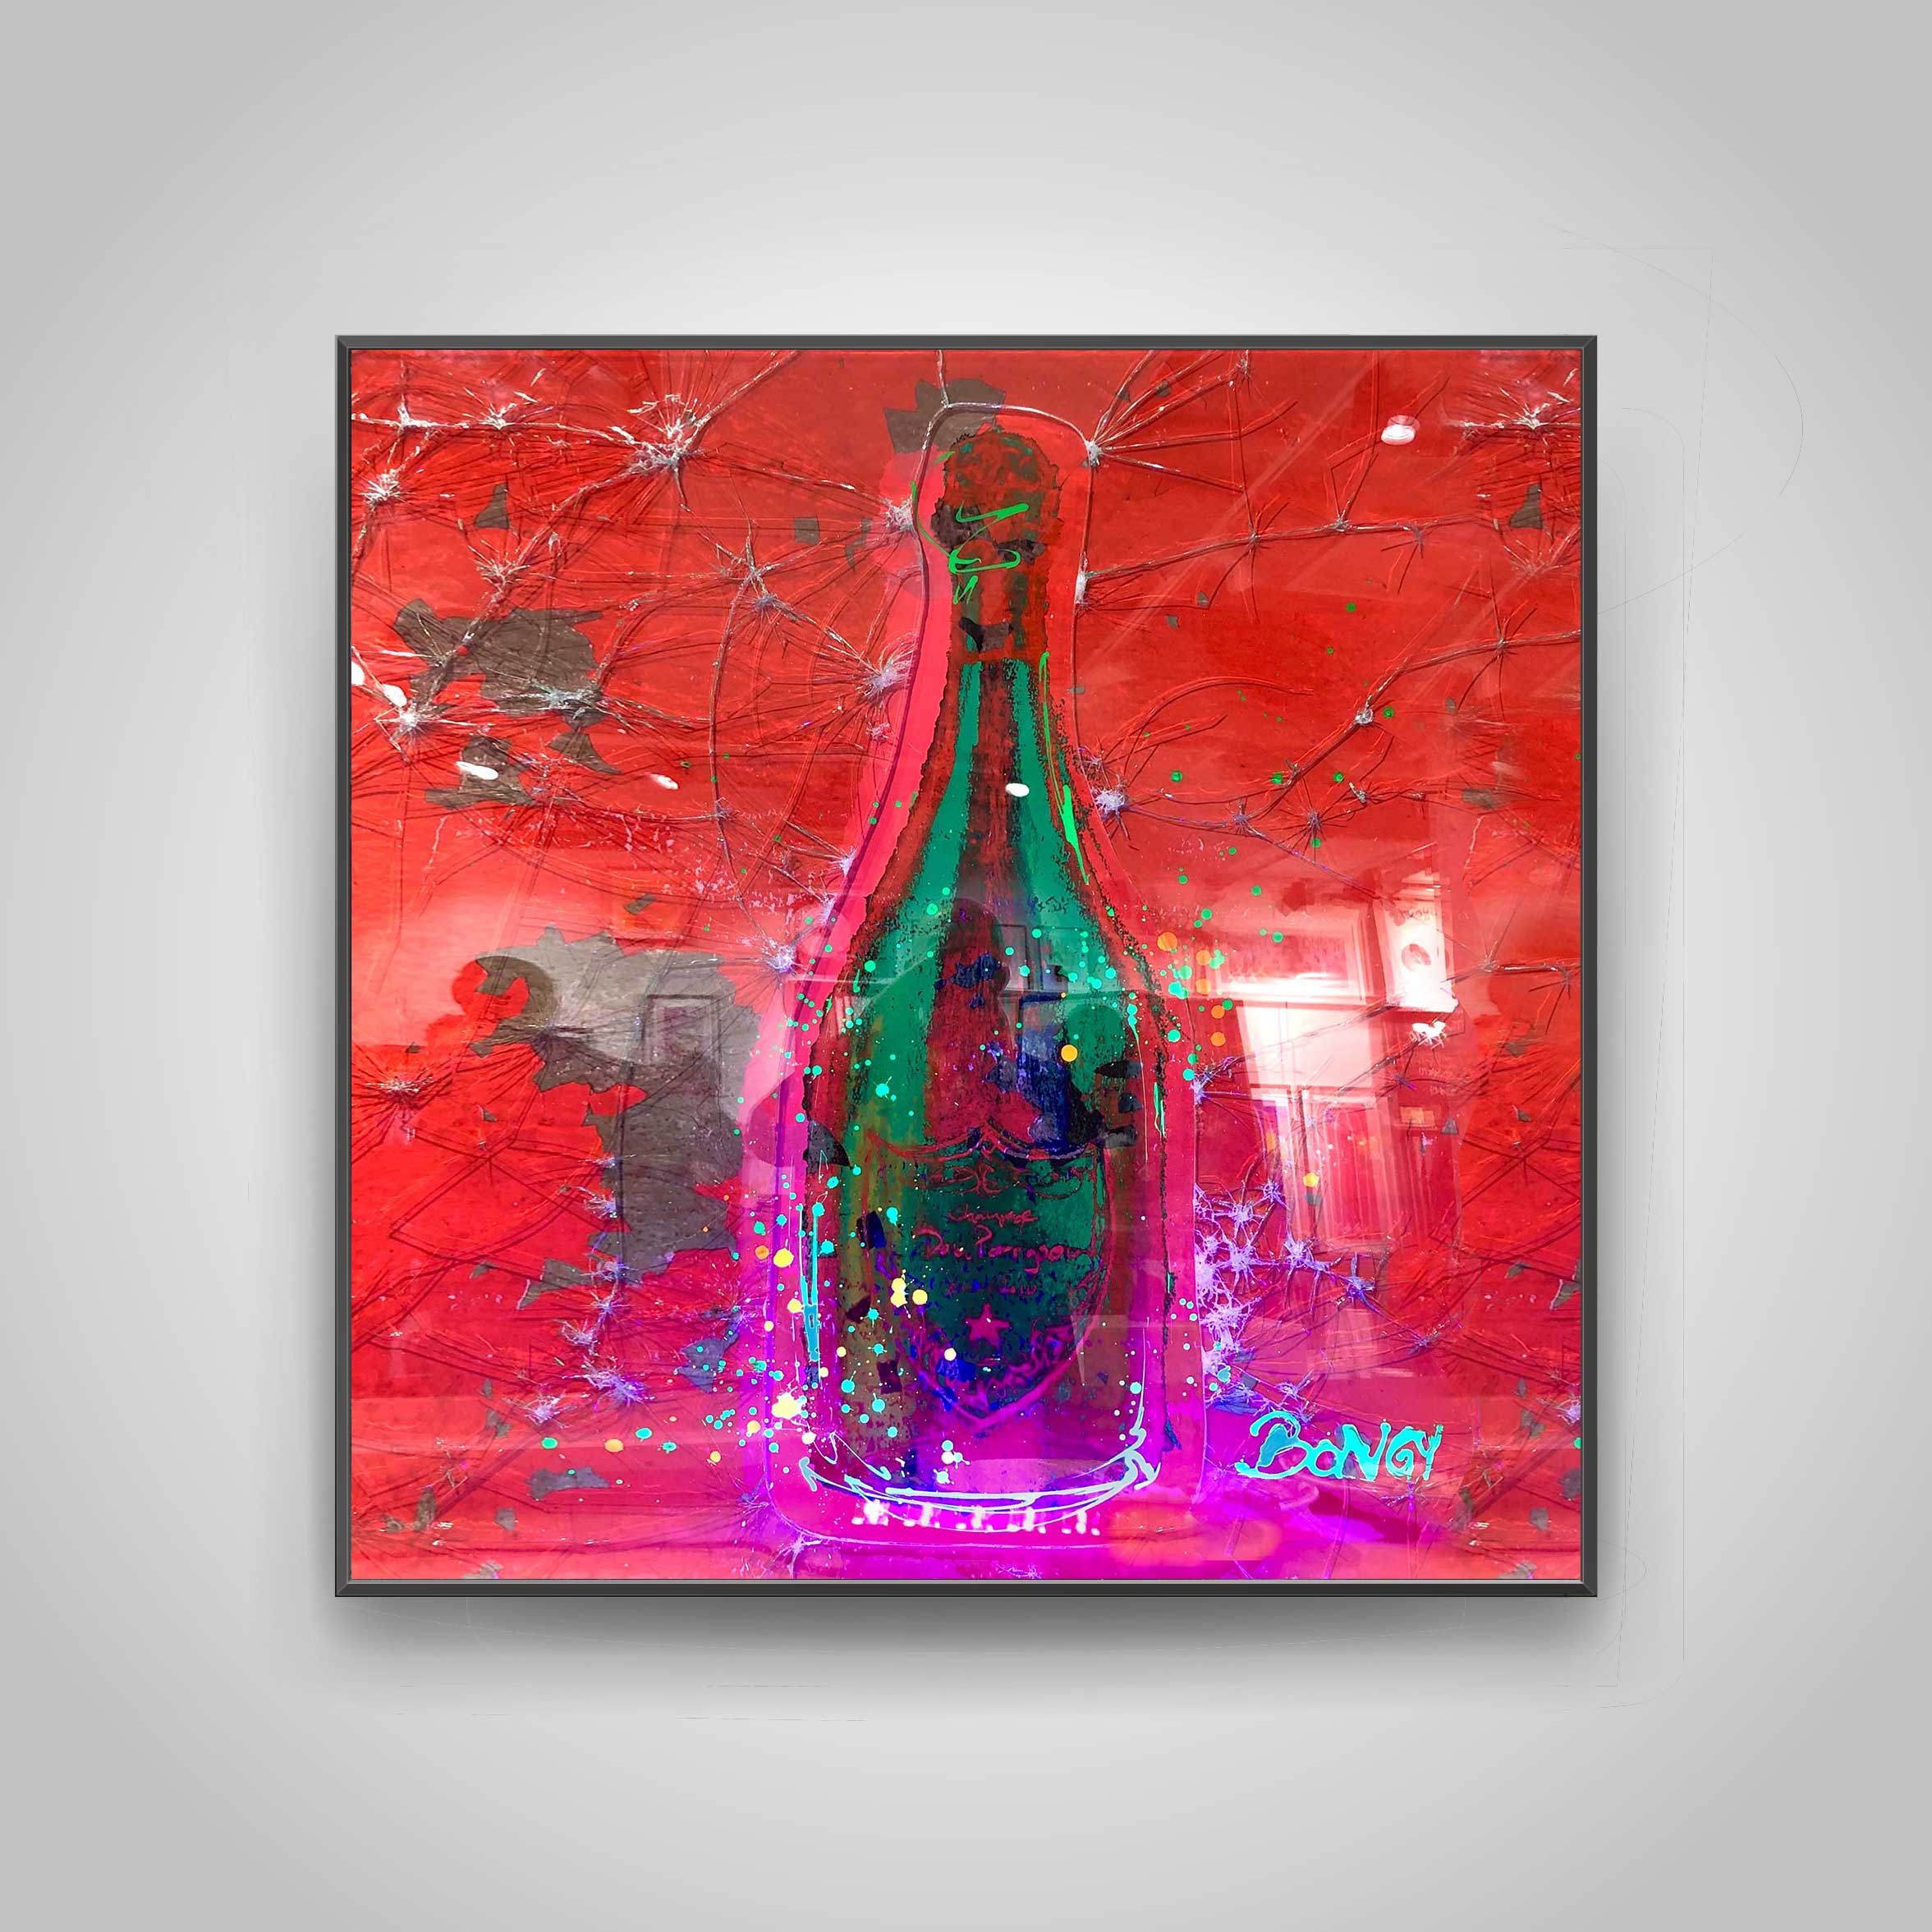 Dom-Perignon-inramad-1x1m-krossat-glas